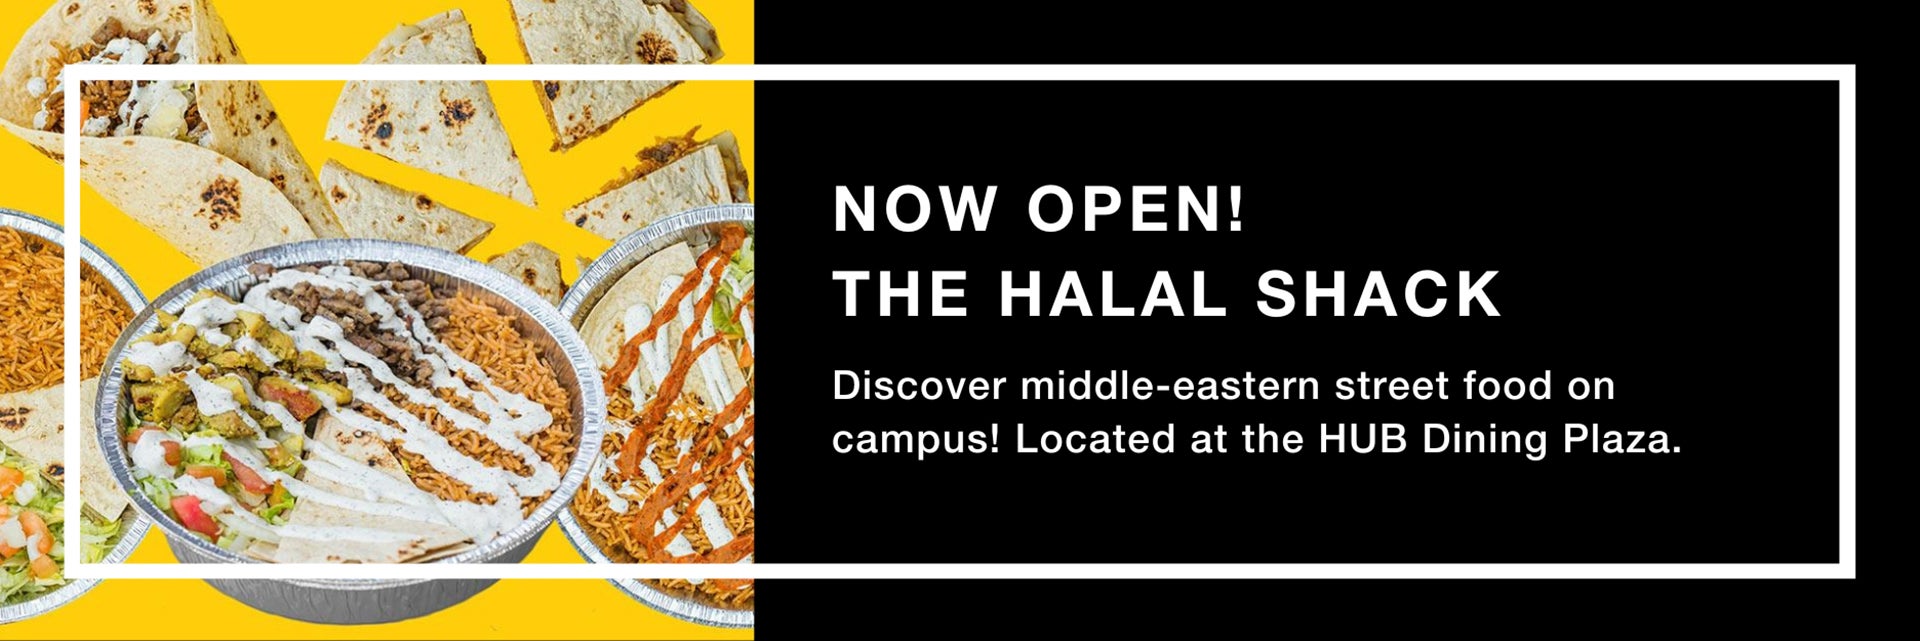 Halal Shack open at the HUB